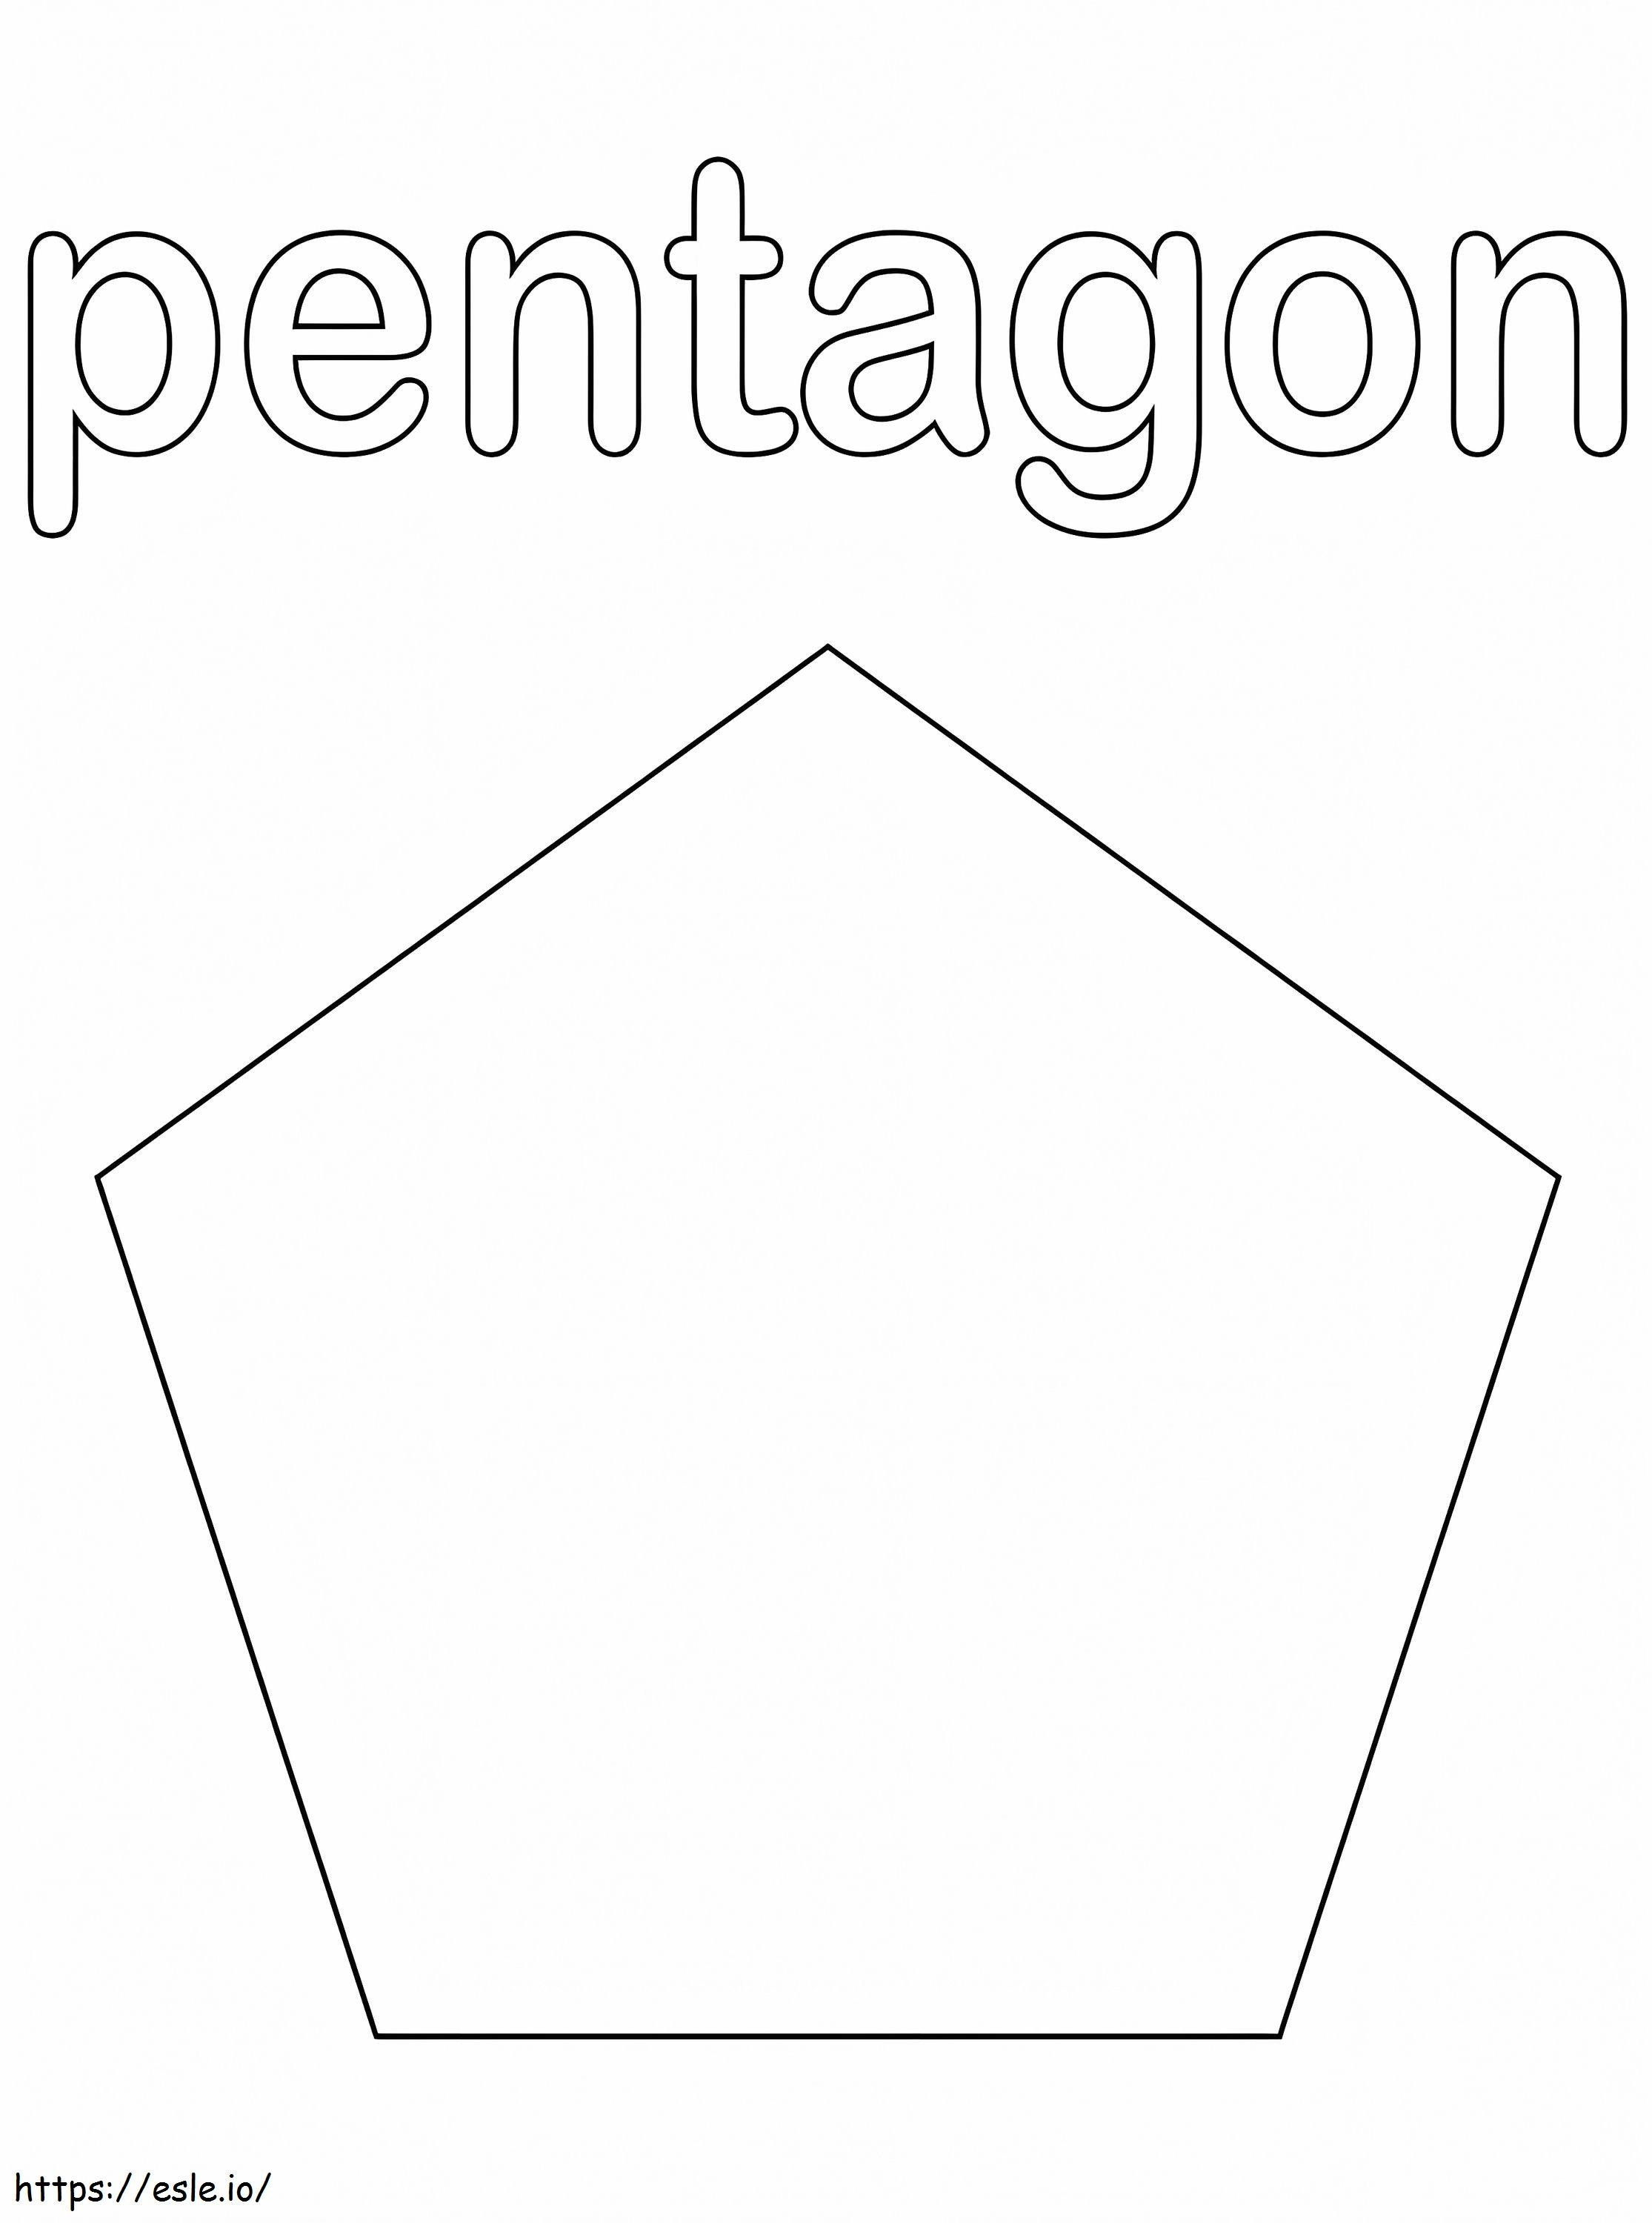 Pentagon de colorat